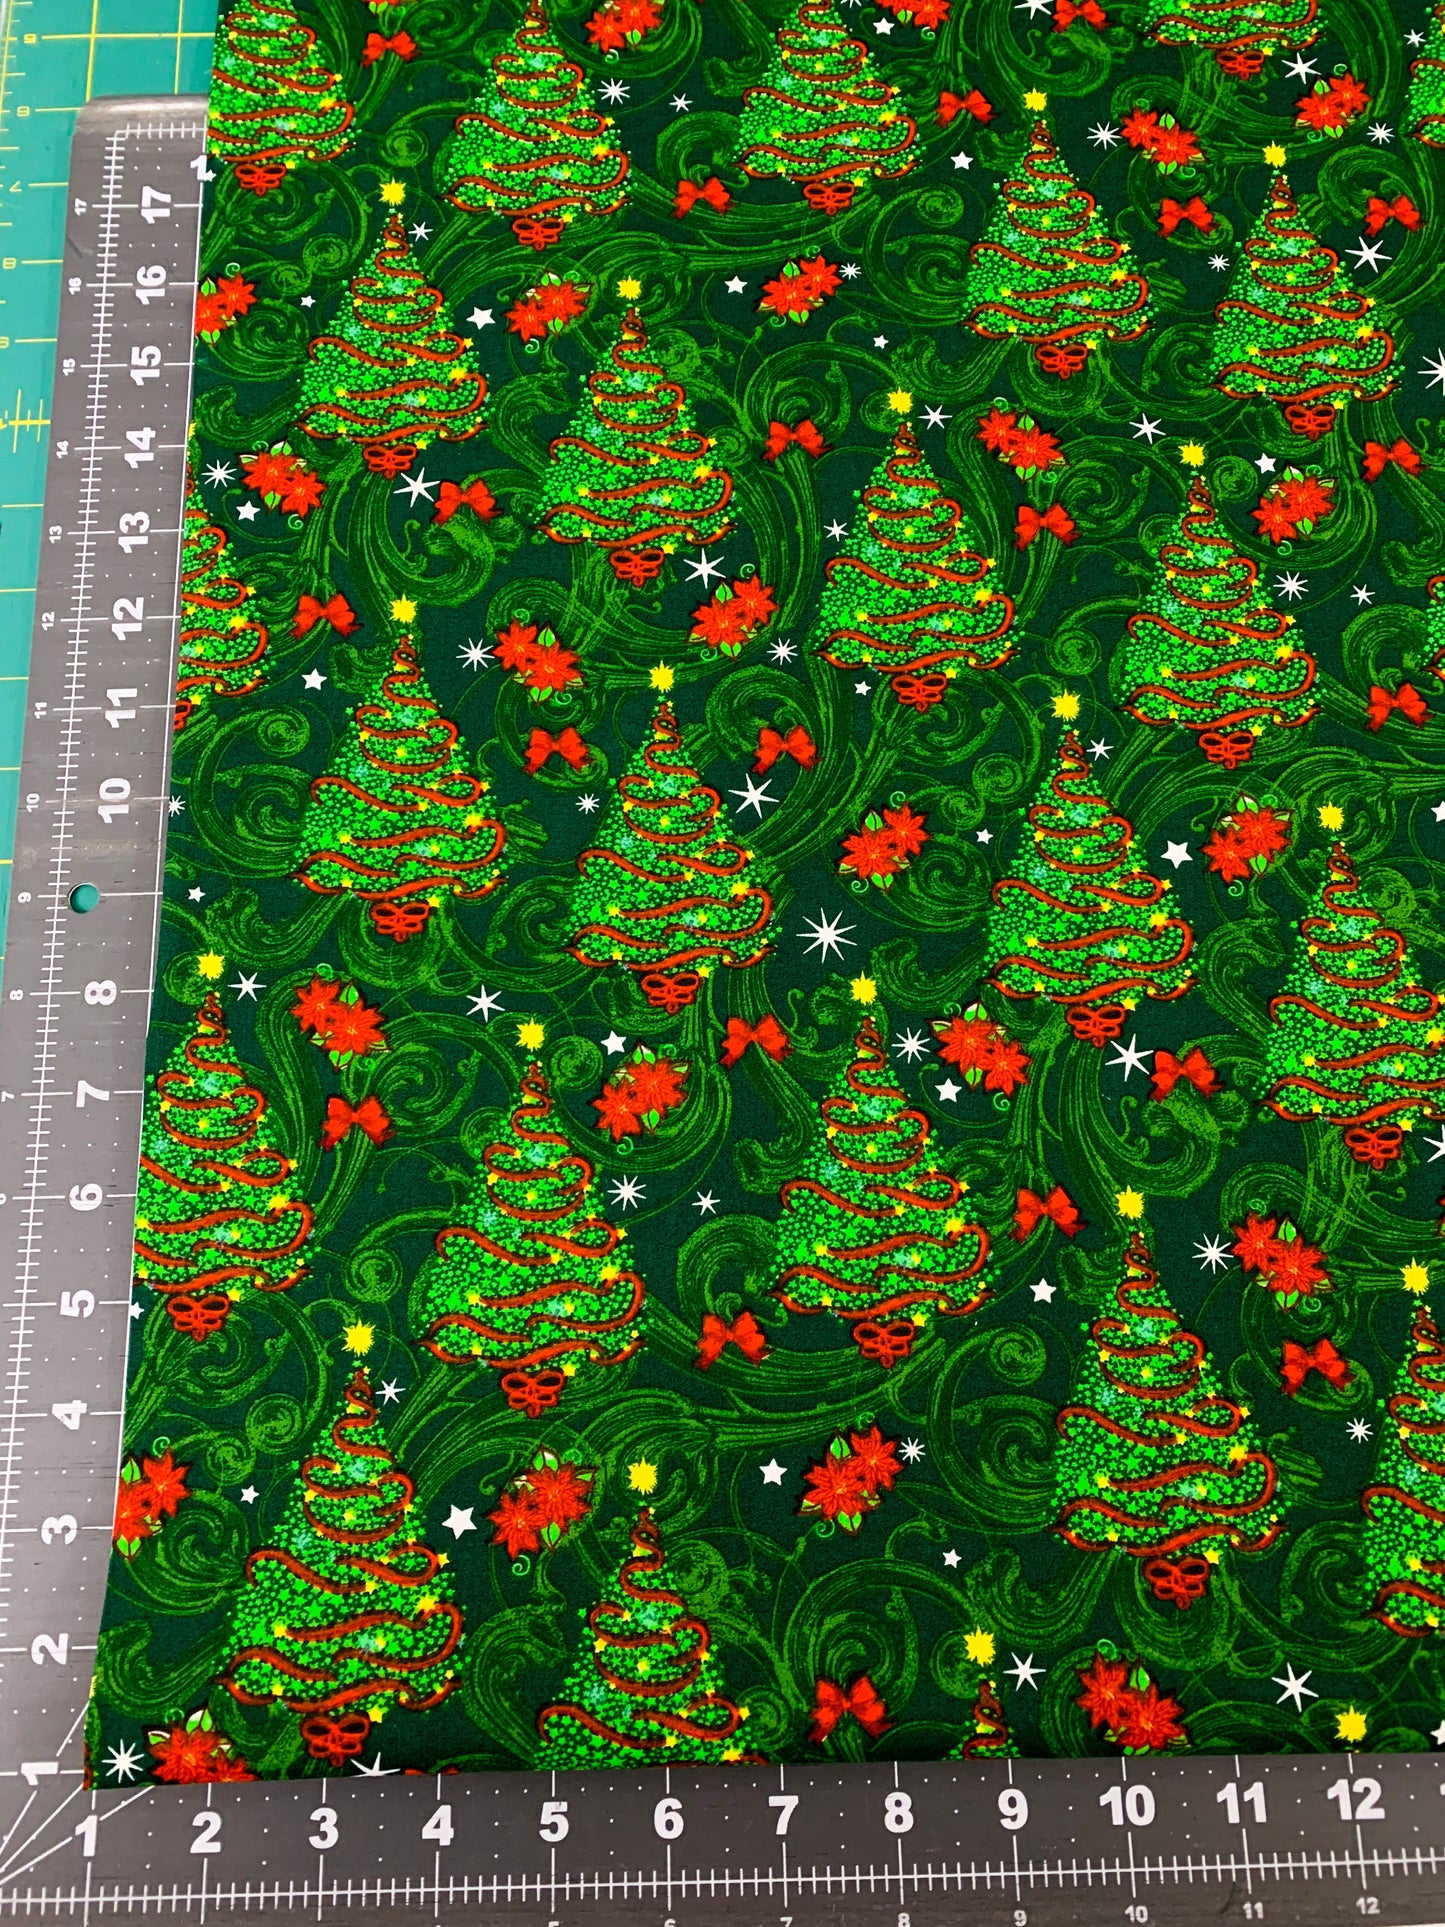 Green Christmas Tree fabric Christmas quilting fabric